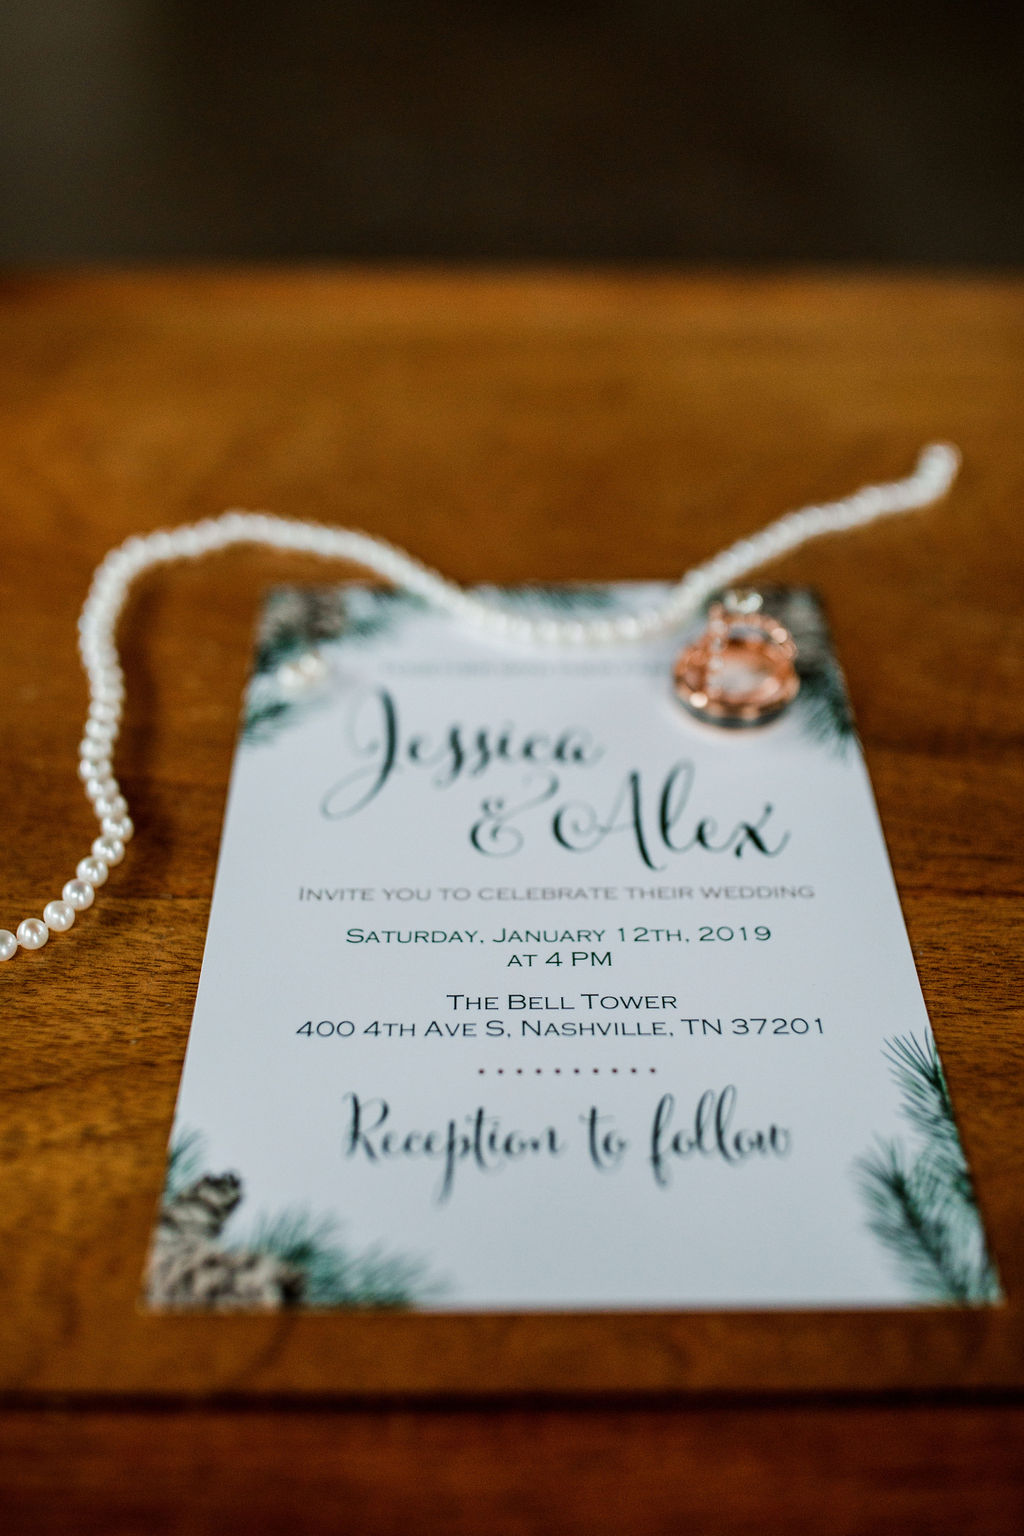 Jessica and Alex's Wedding Invitation